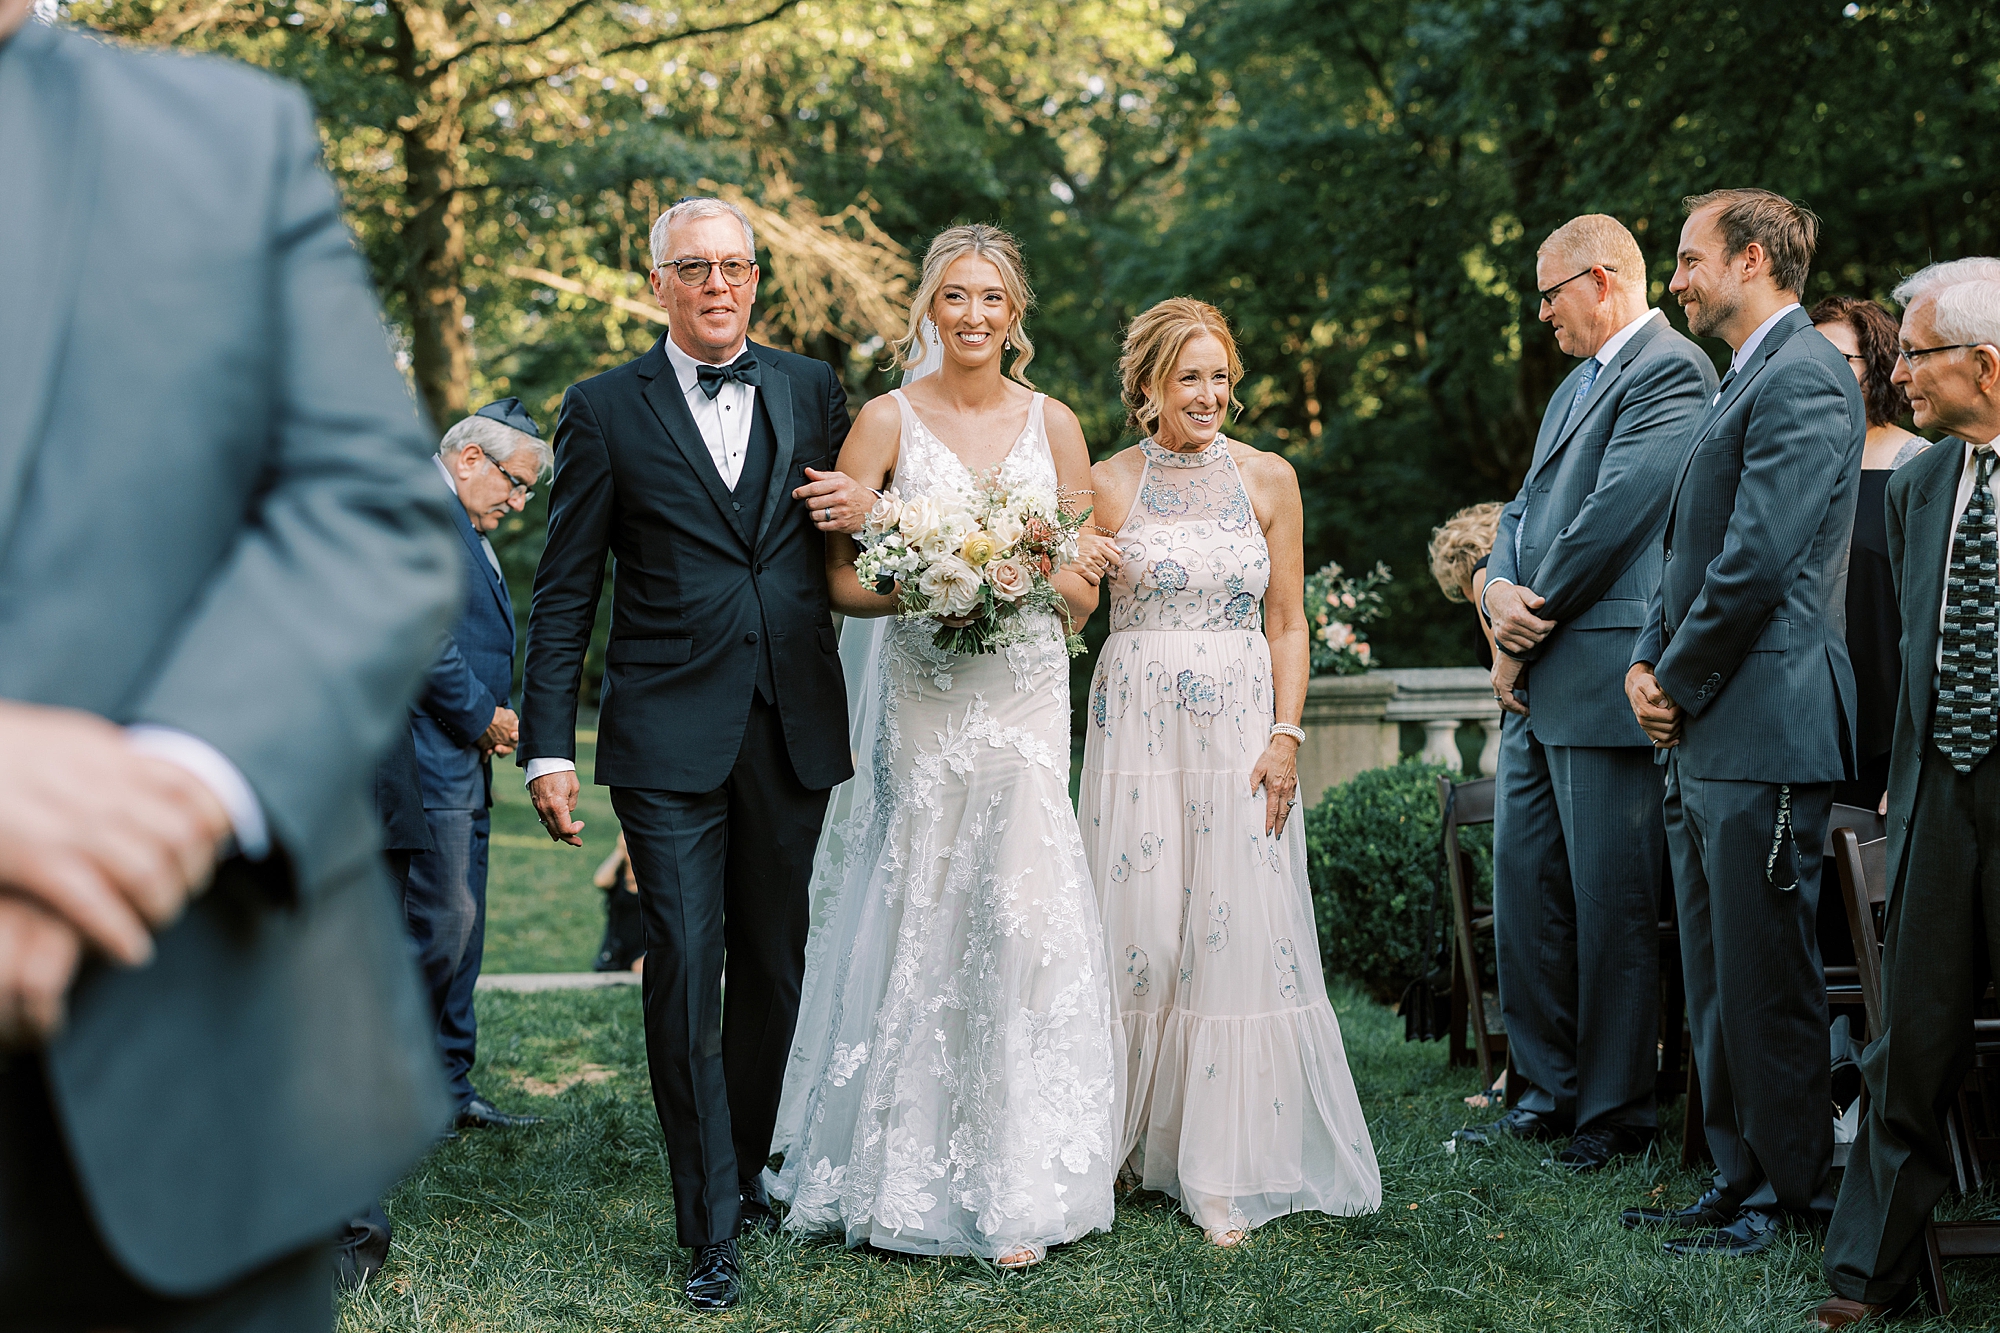 bride walks down aisle during Curtis Arboretum wedding ceremony on lawn